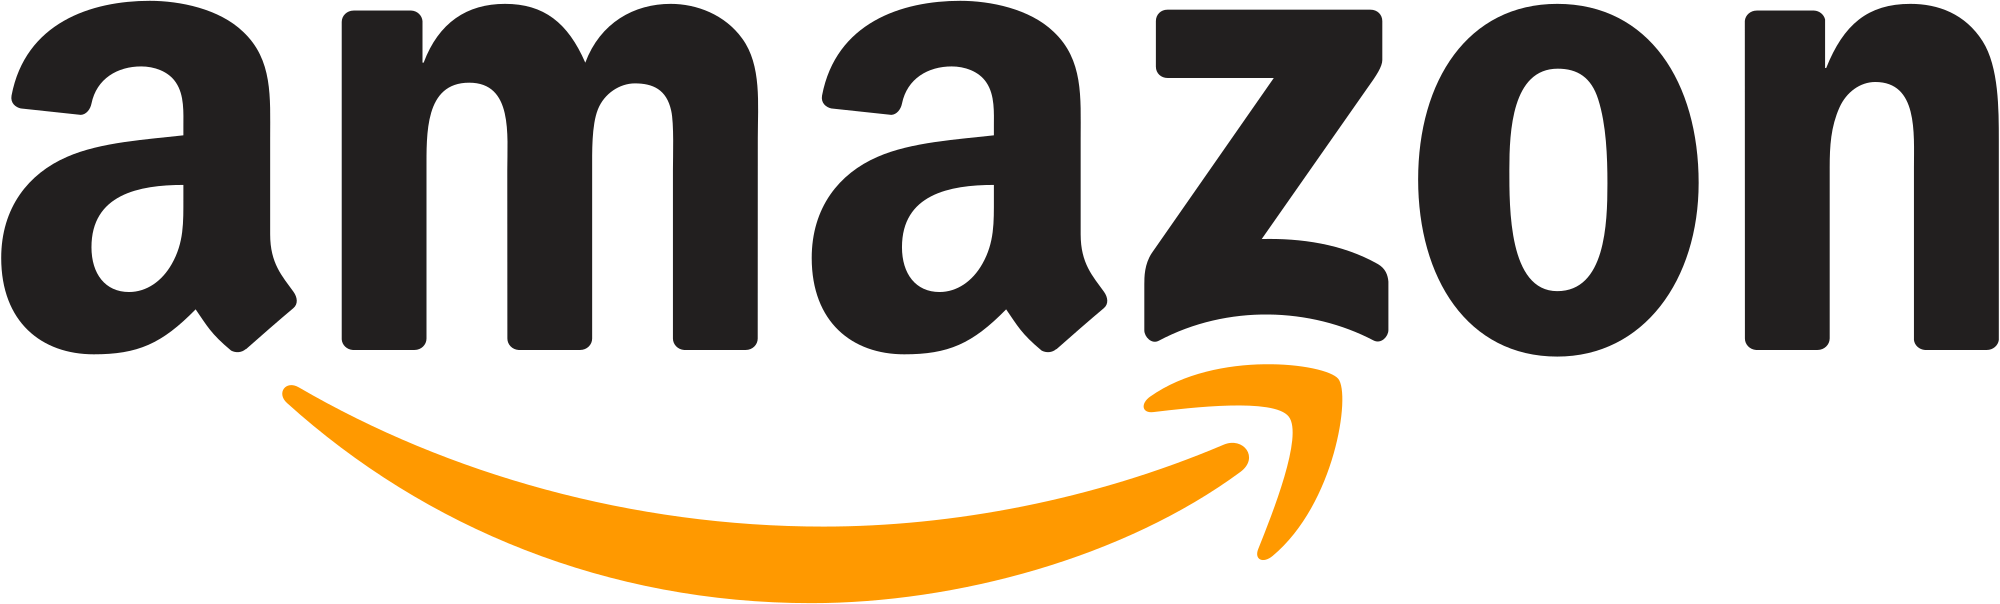 2000px-Amazon_logo_plain.svg